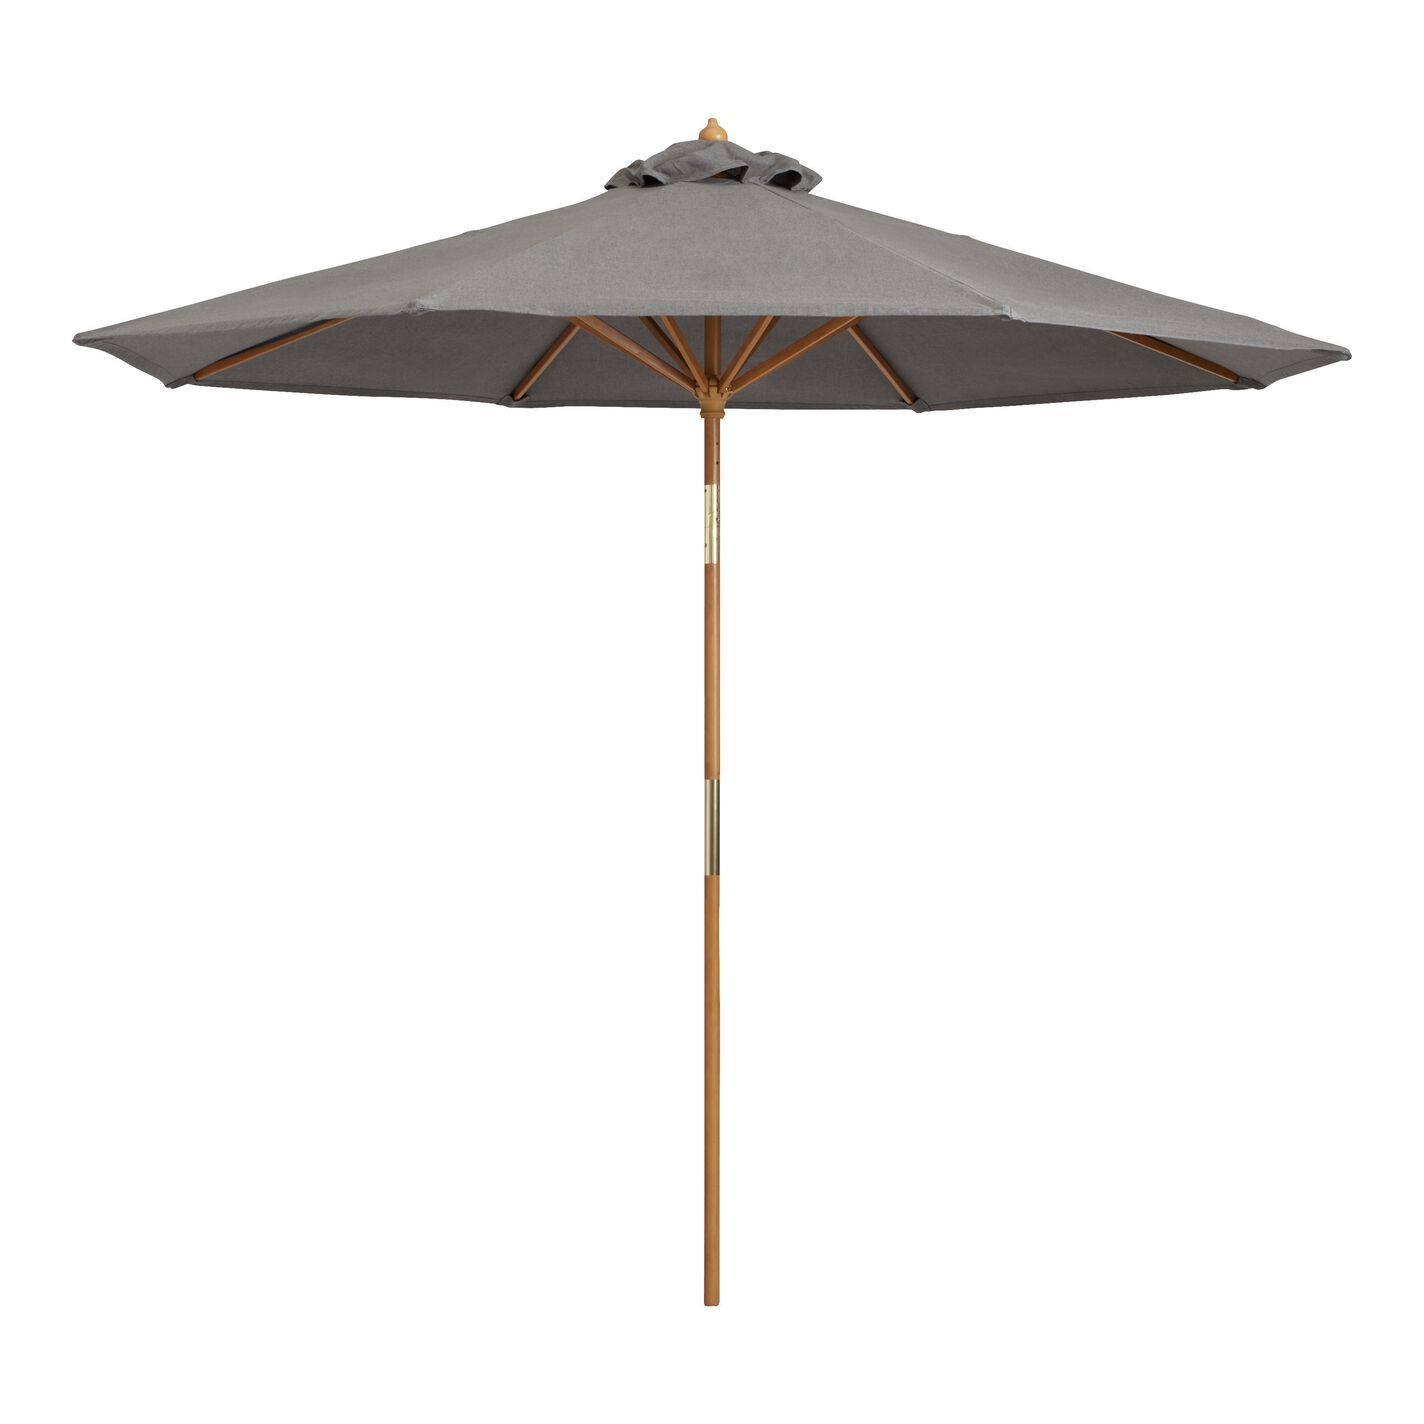 Sunbrella 9 Ft Replacement Umbrella Canopy | World Market